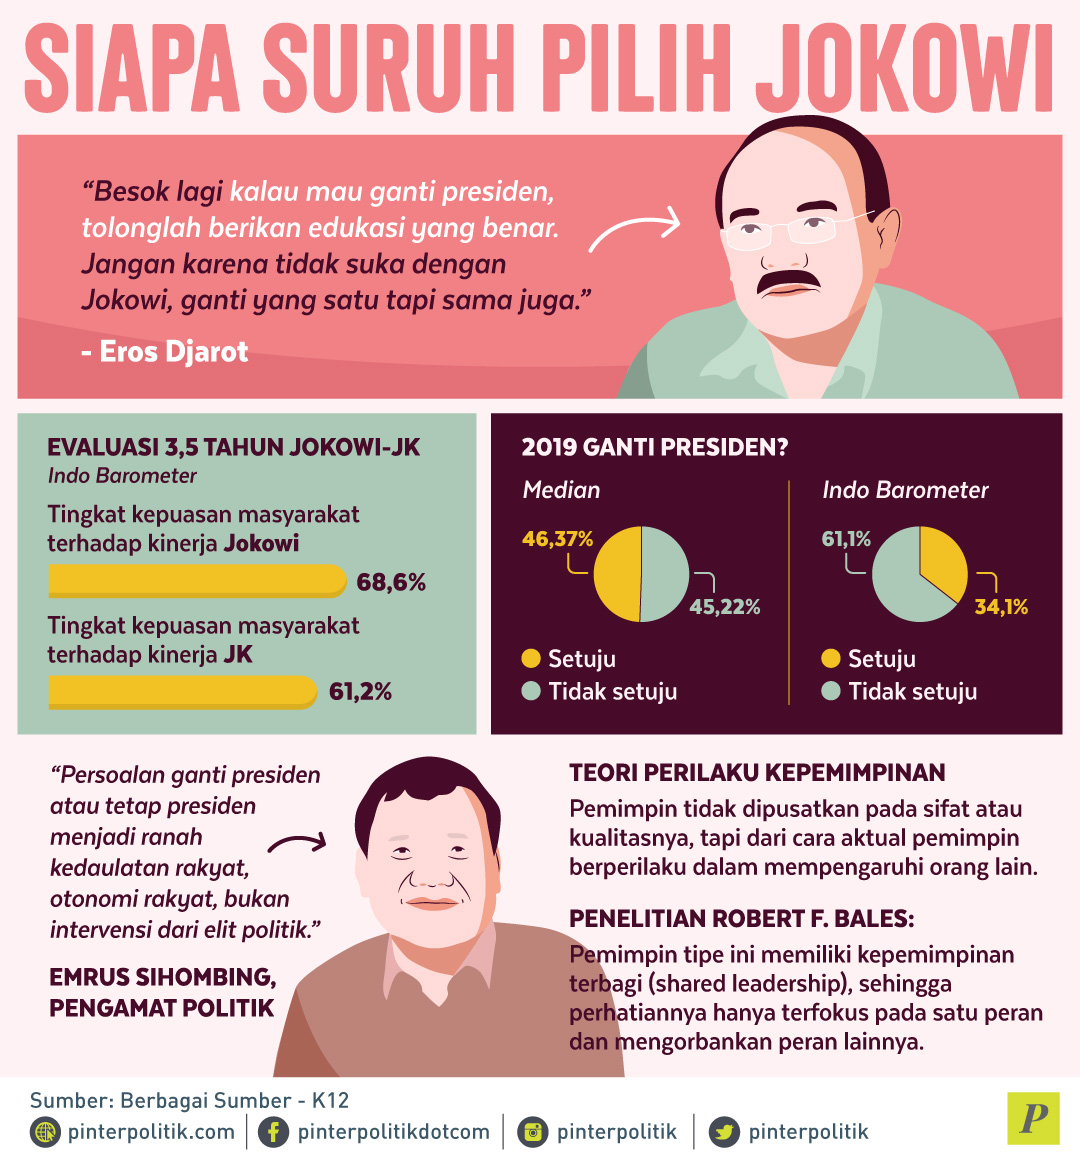 Siapa Yang Suruh Pilih Jokowi